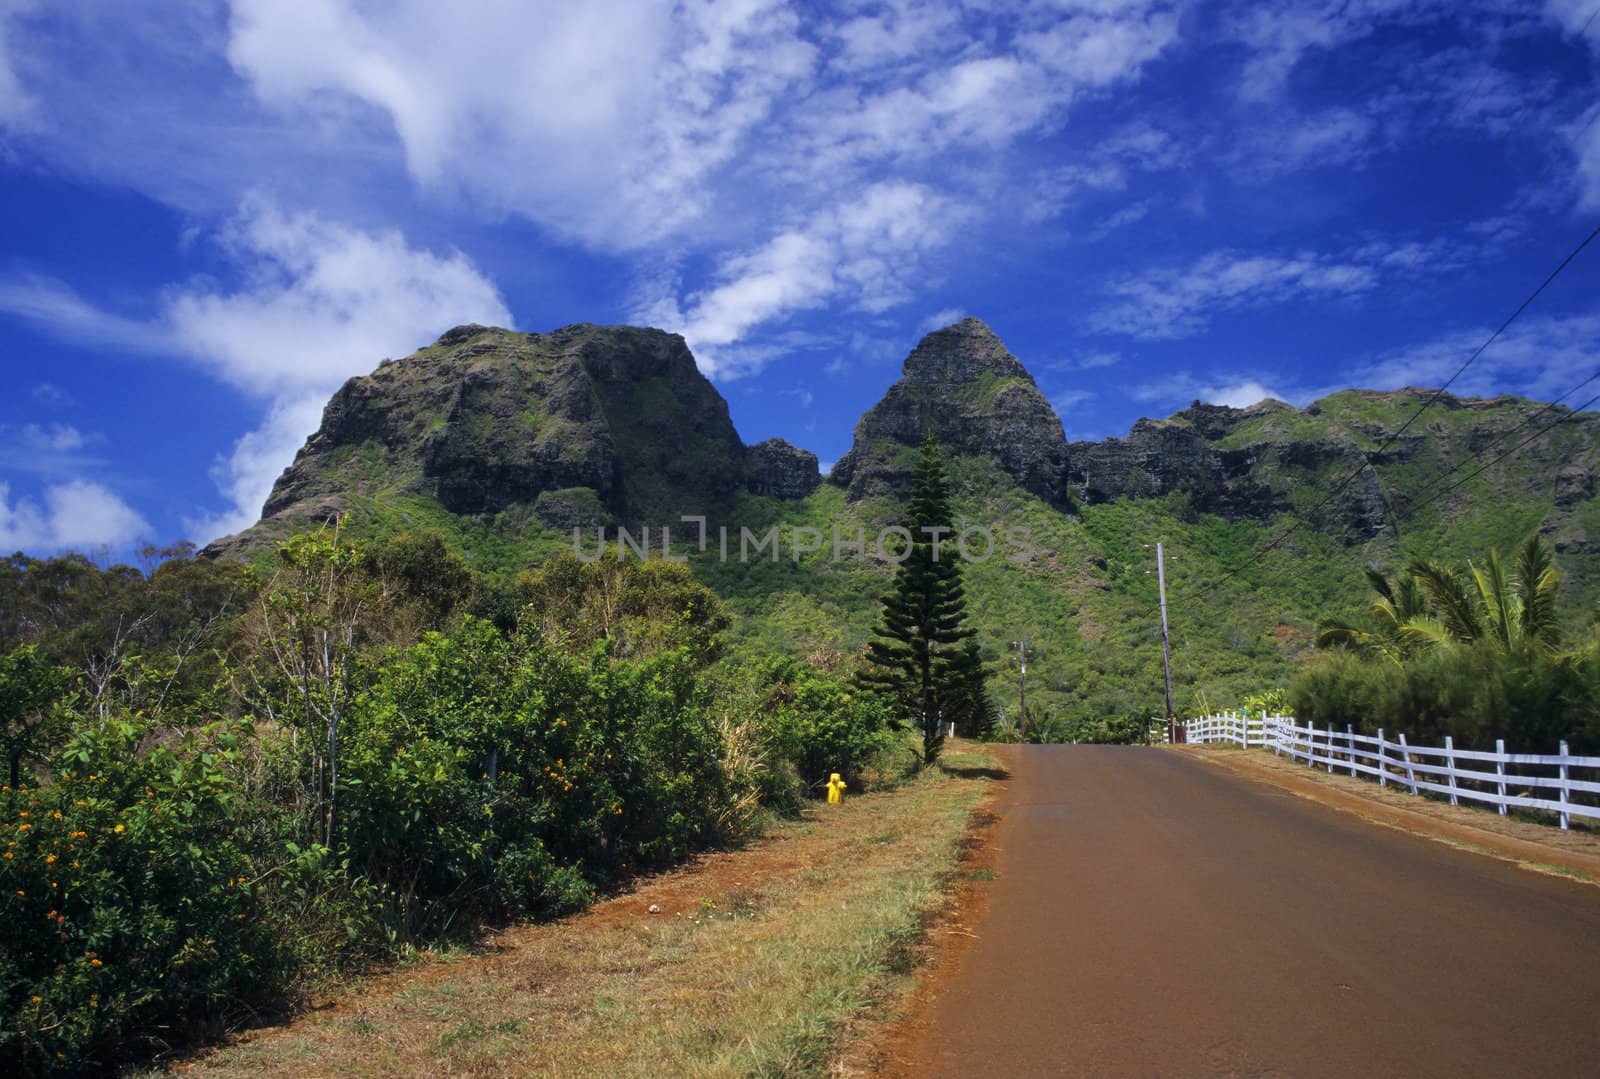 A country road leads up toward the peak of Nounou Mountain on the island of Kauai.